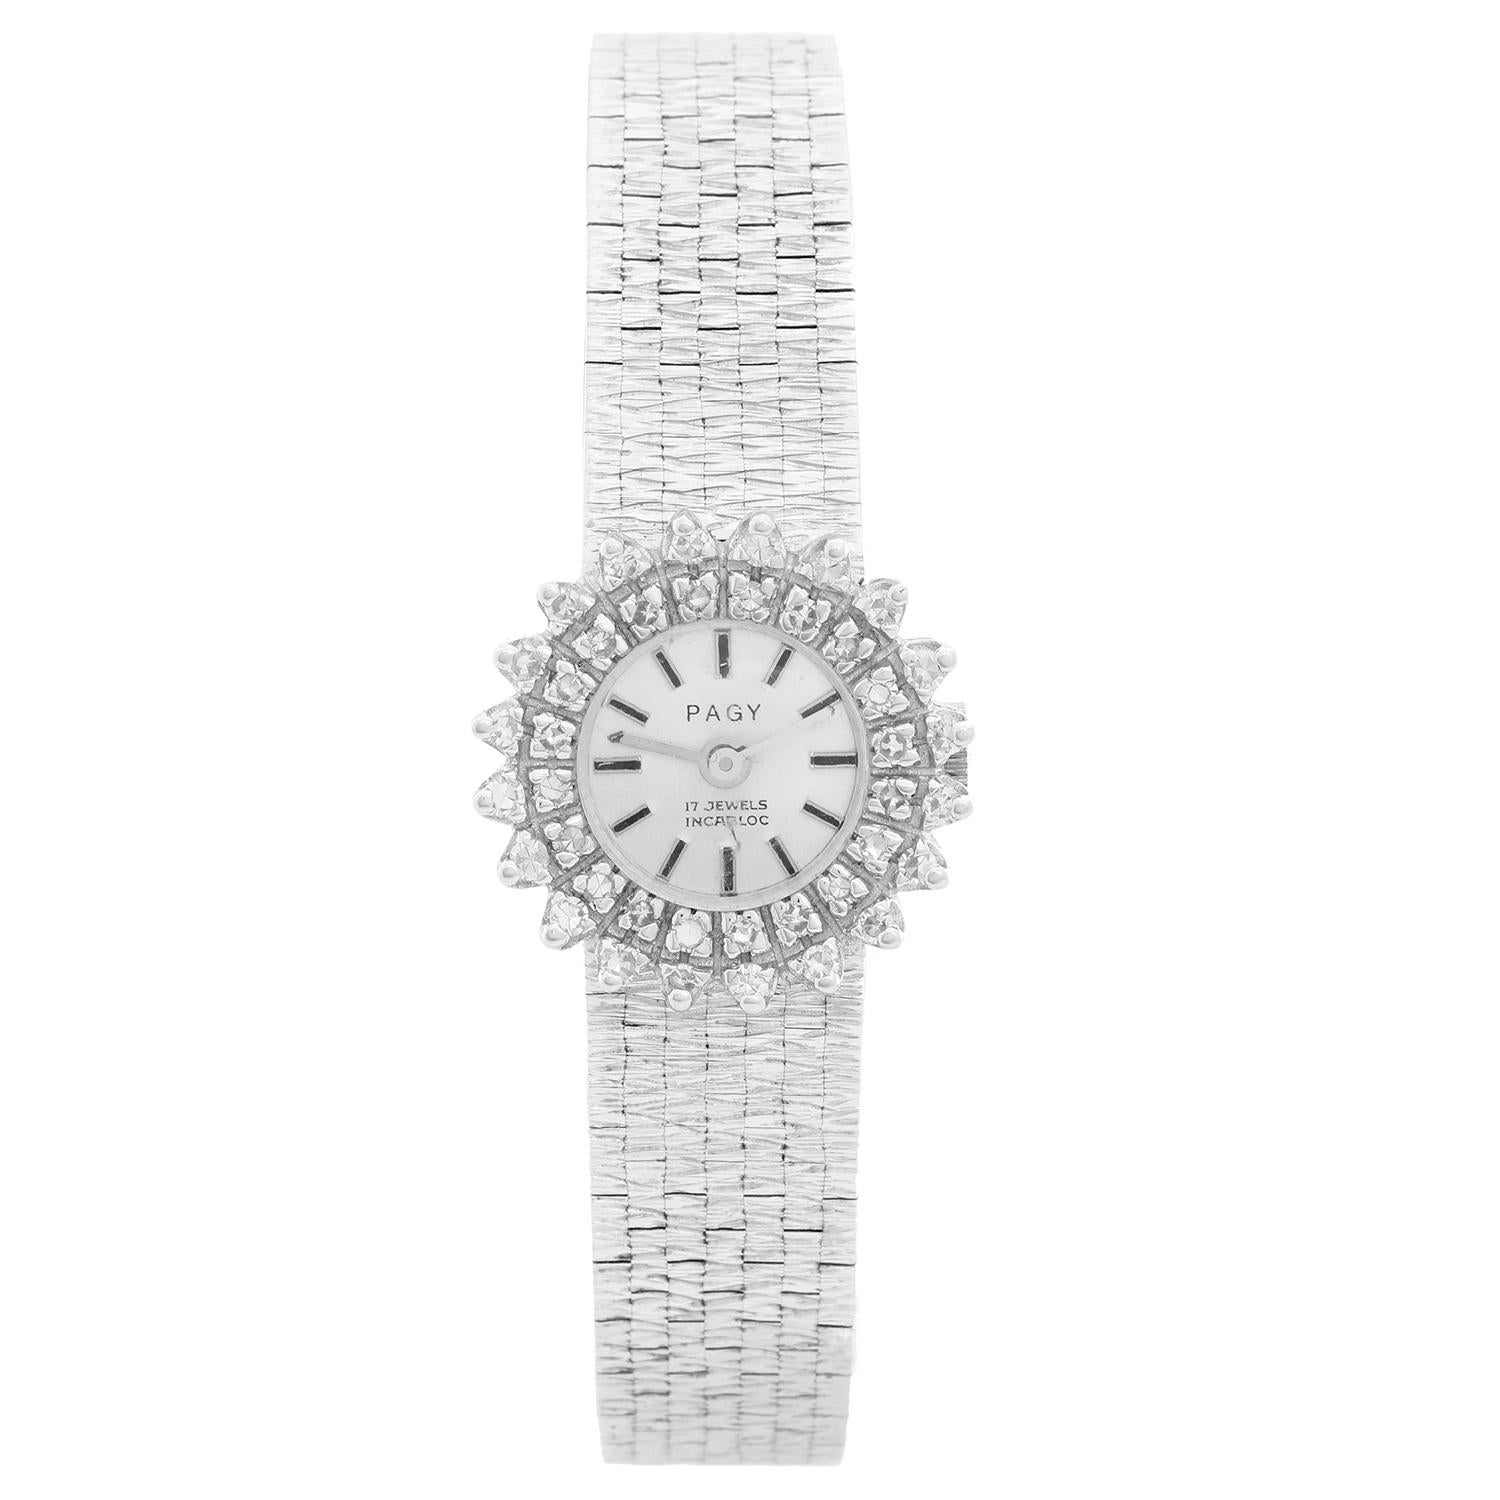 Vintage Ladies 18 Karat White Gold and Diamond Pagy Watch